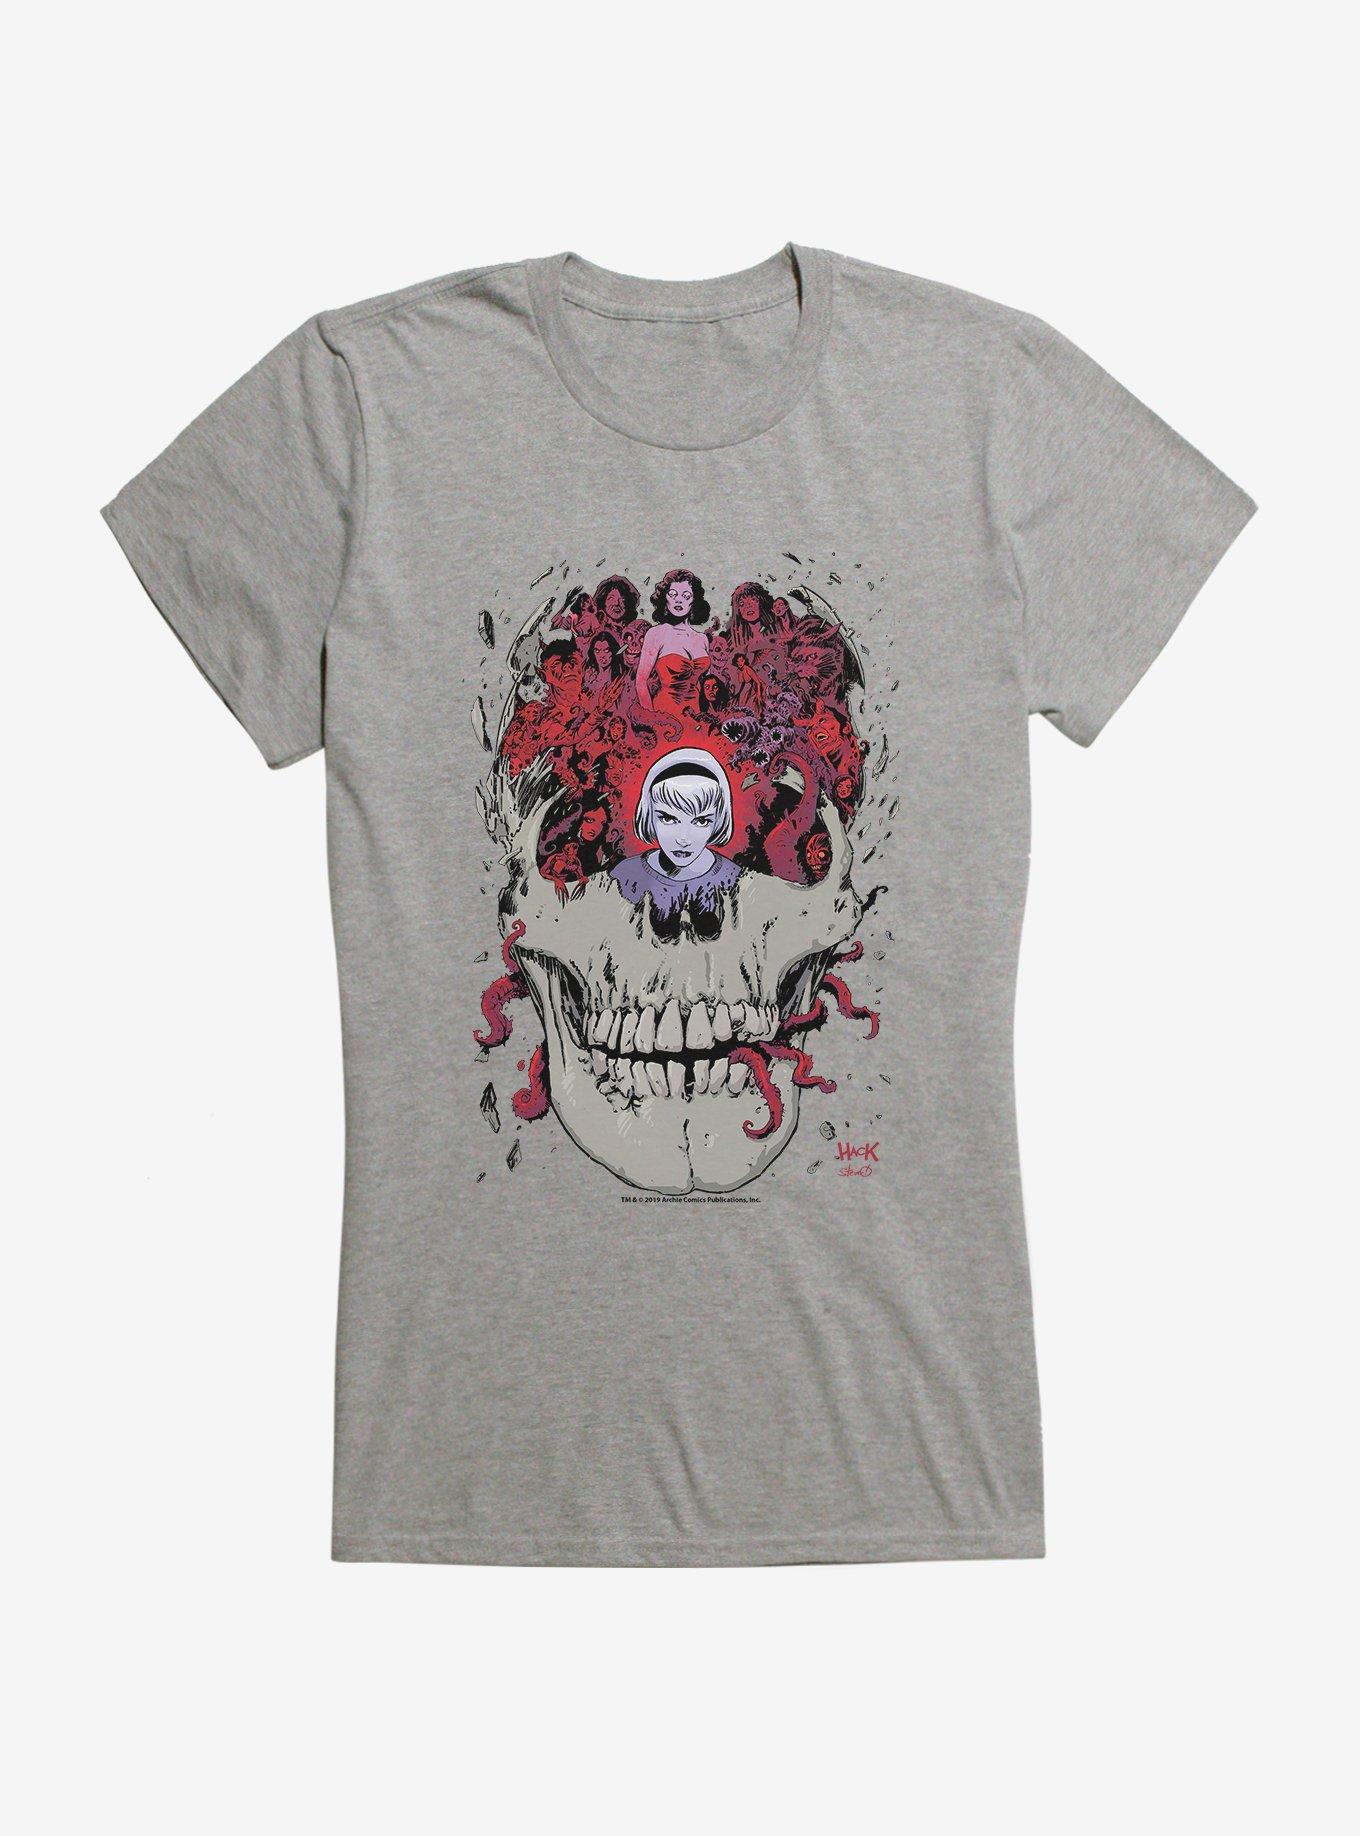 Chilling Adventures of Sabrina Skull Girls T-Shirt, HEATHER, hi-res